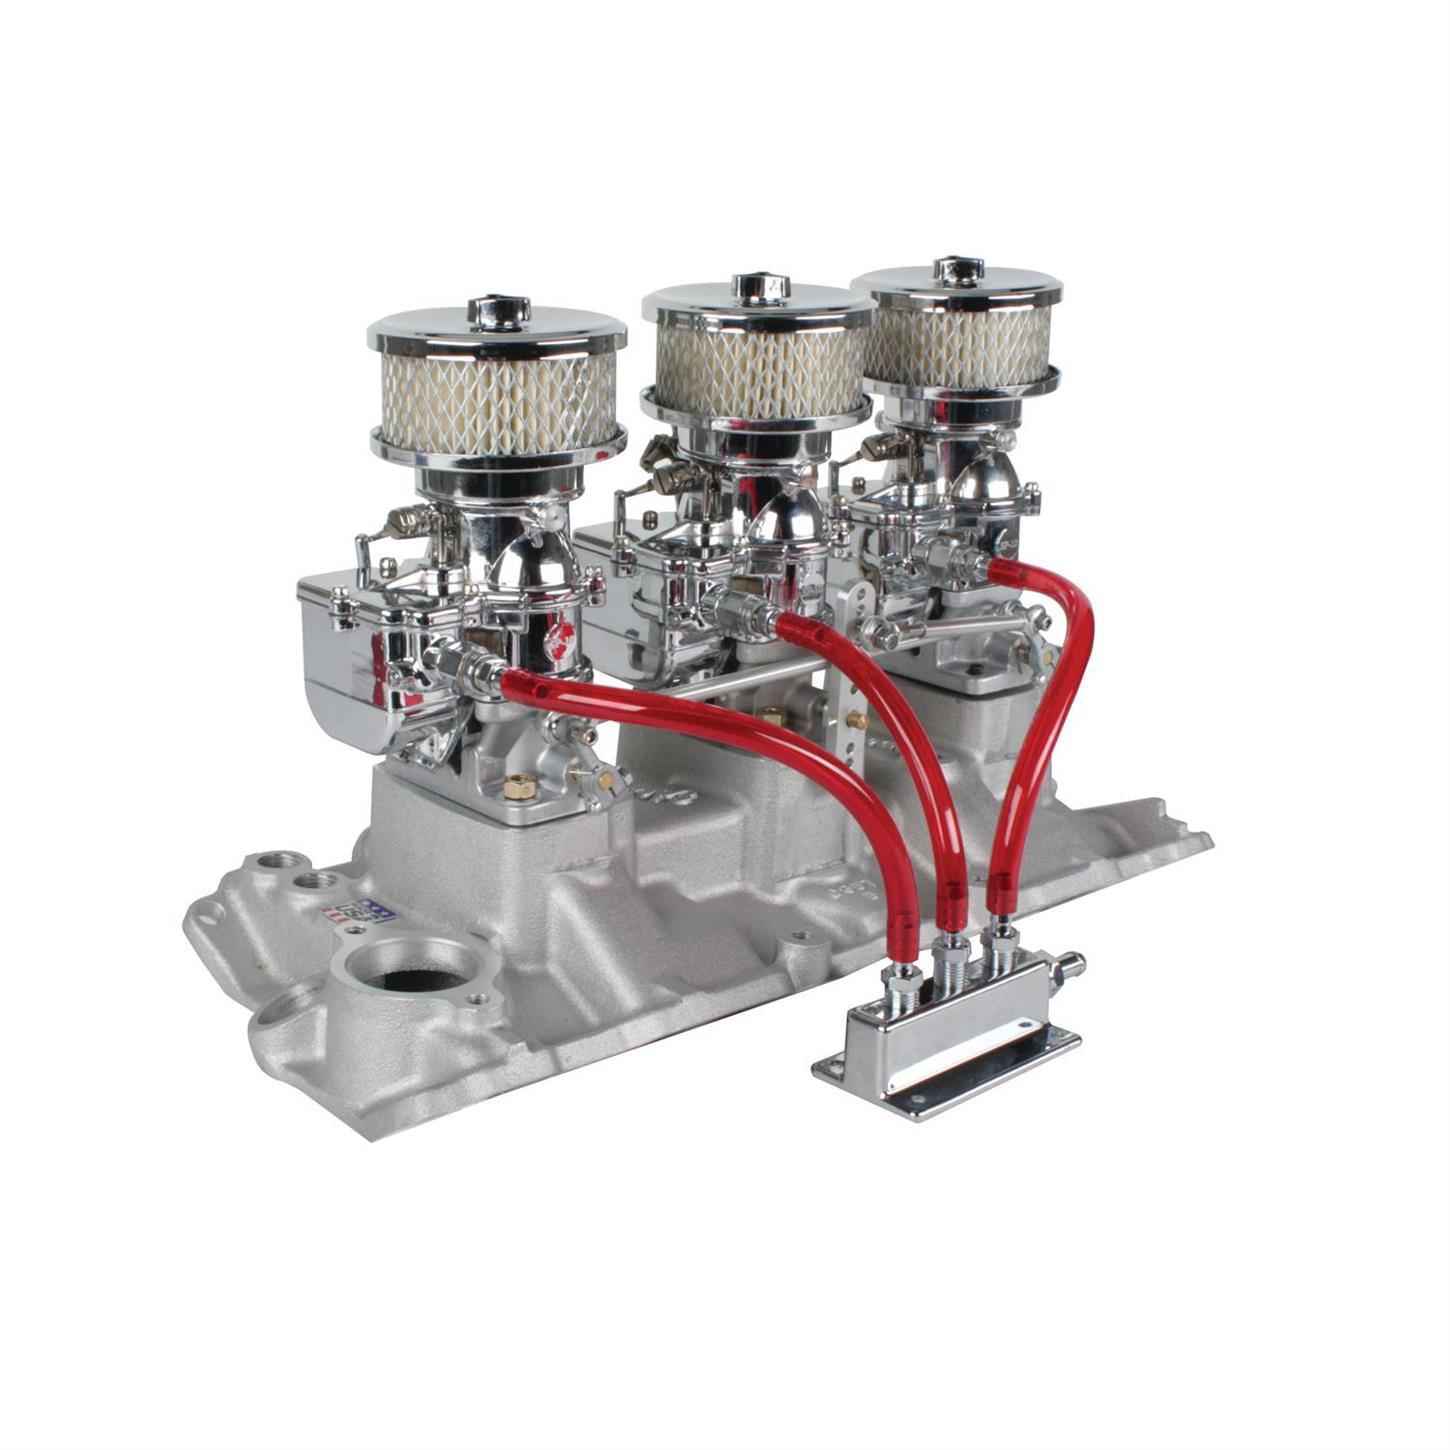 Holley Carburetor Linkage Kit Ford Small Block 289-302 3x2 TriPower